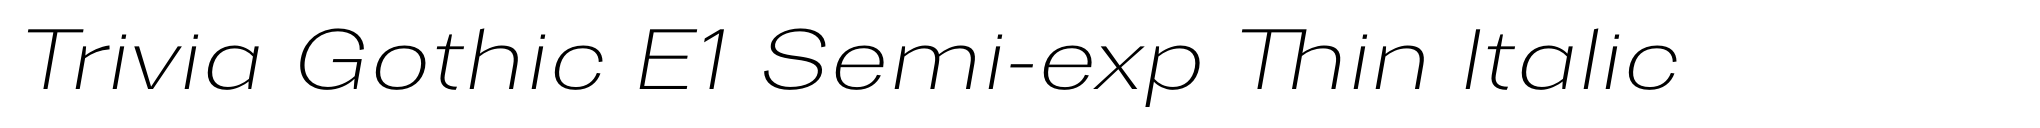 Trivia Gothic E1 Semi-exp Thin Italic image